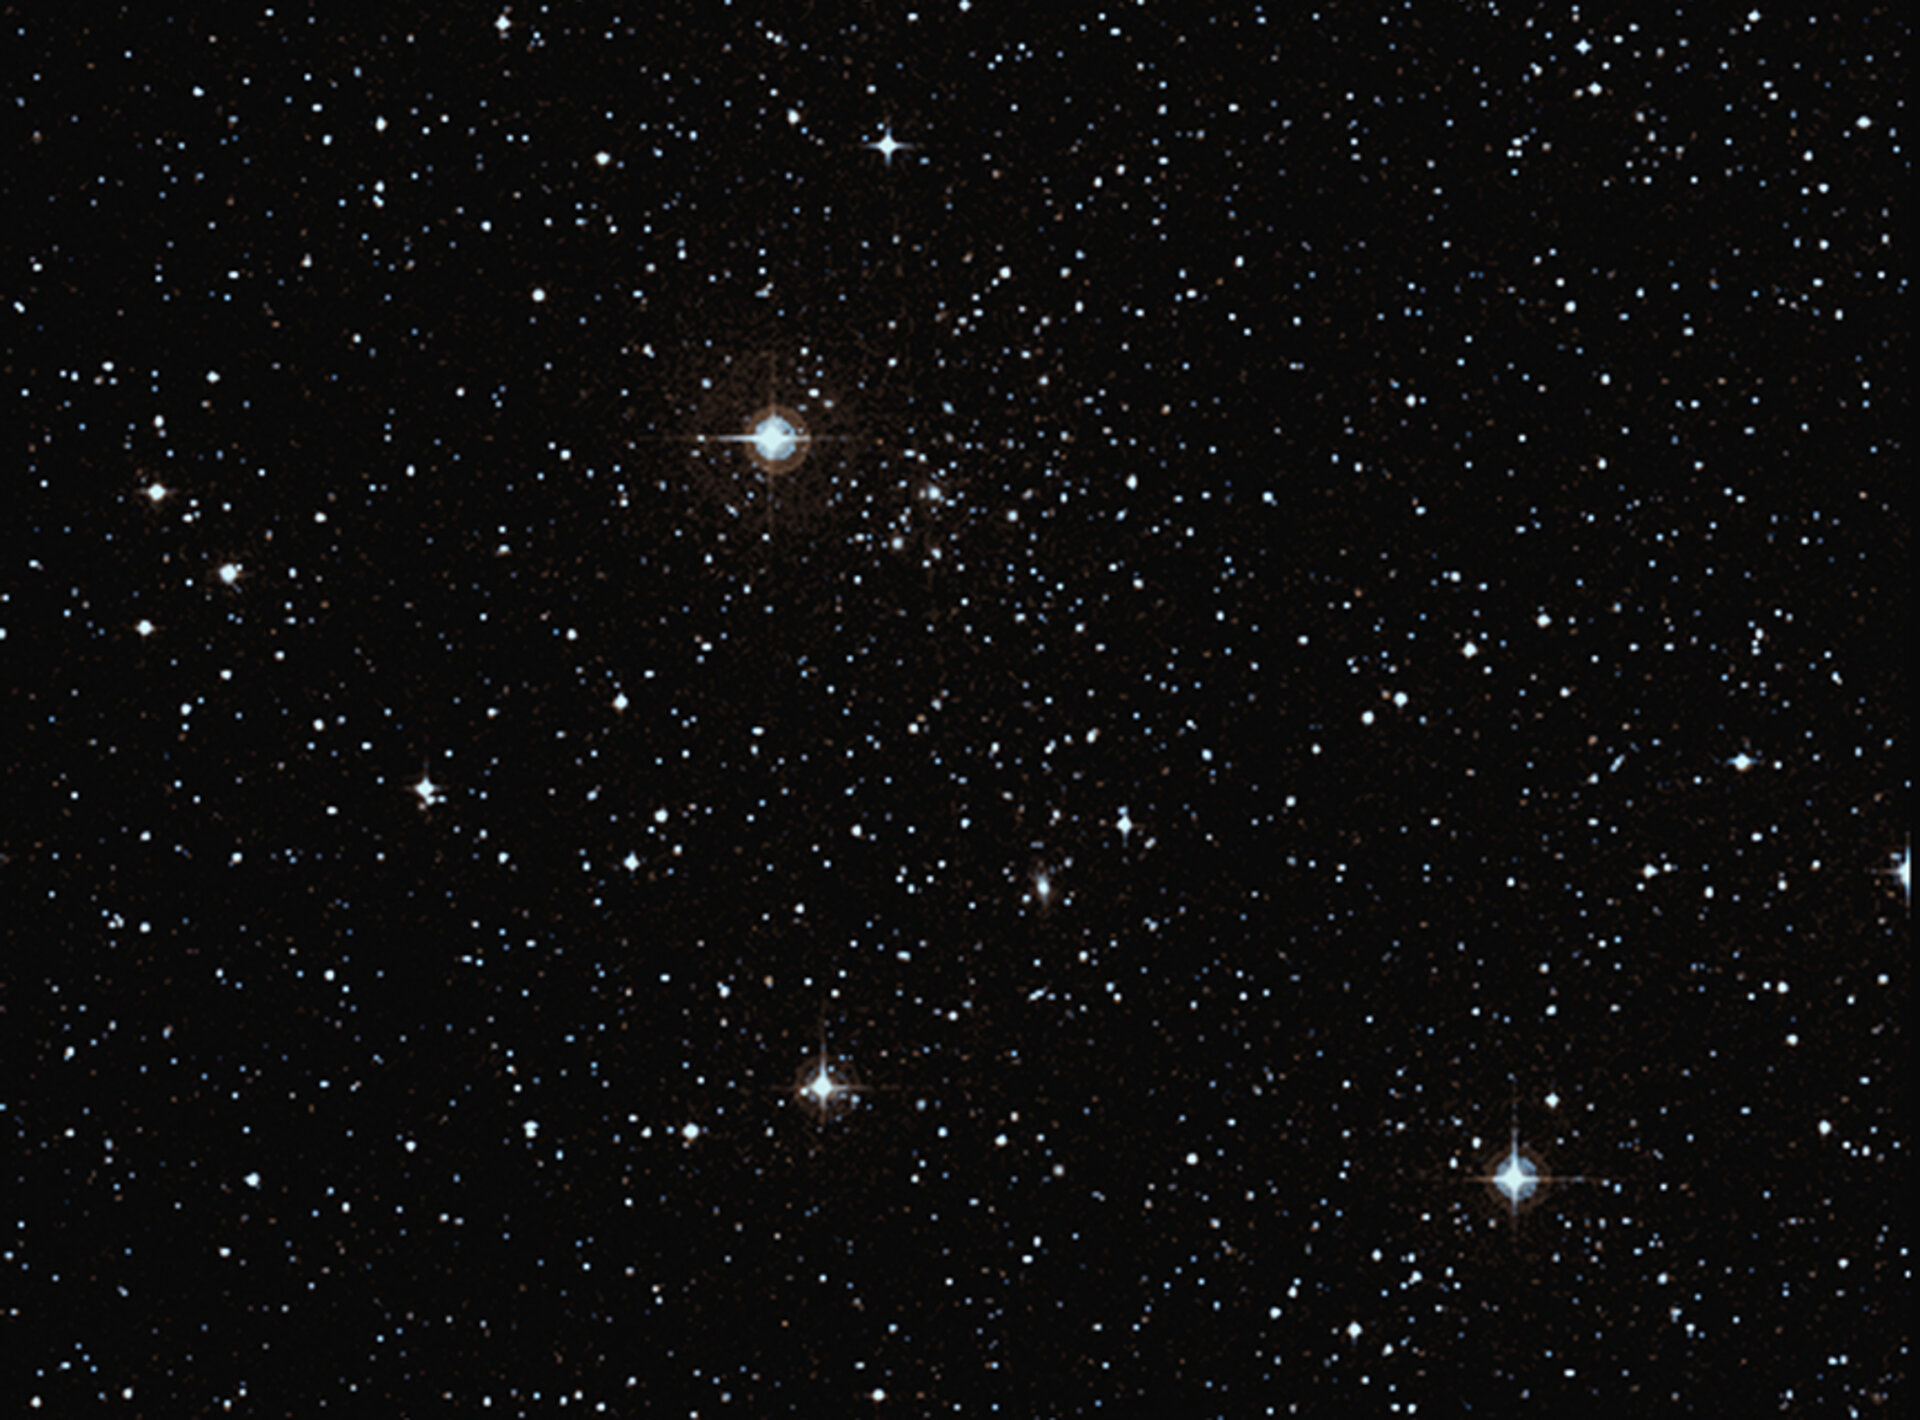 Bridge between galaxy clusters in Abell 2384 – optical view